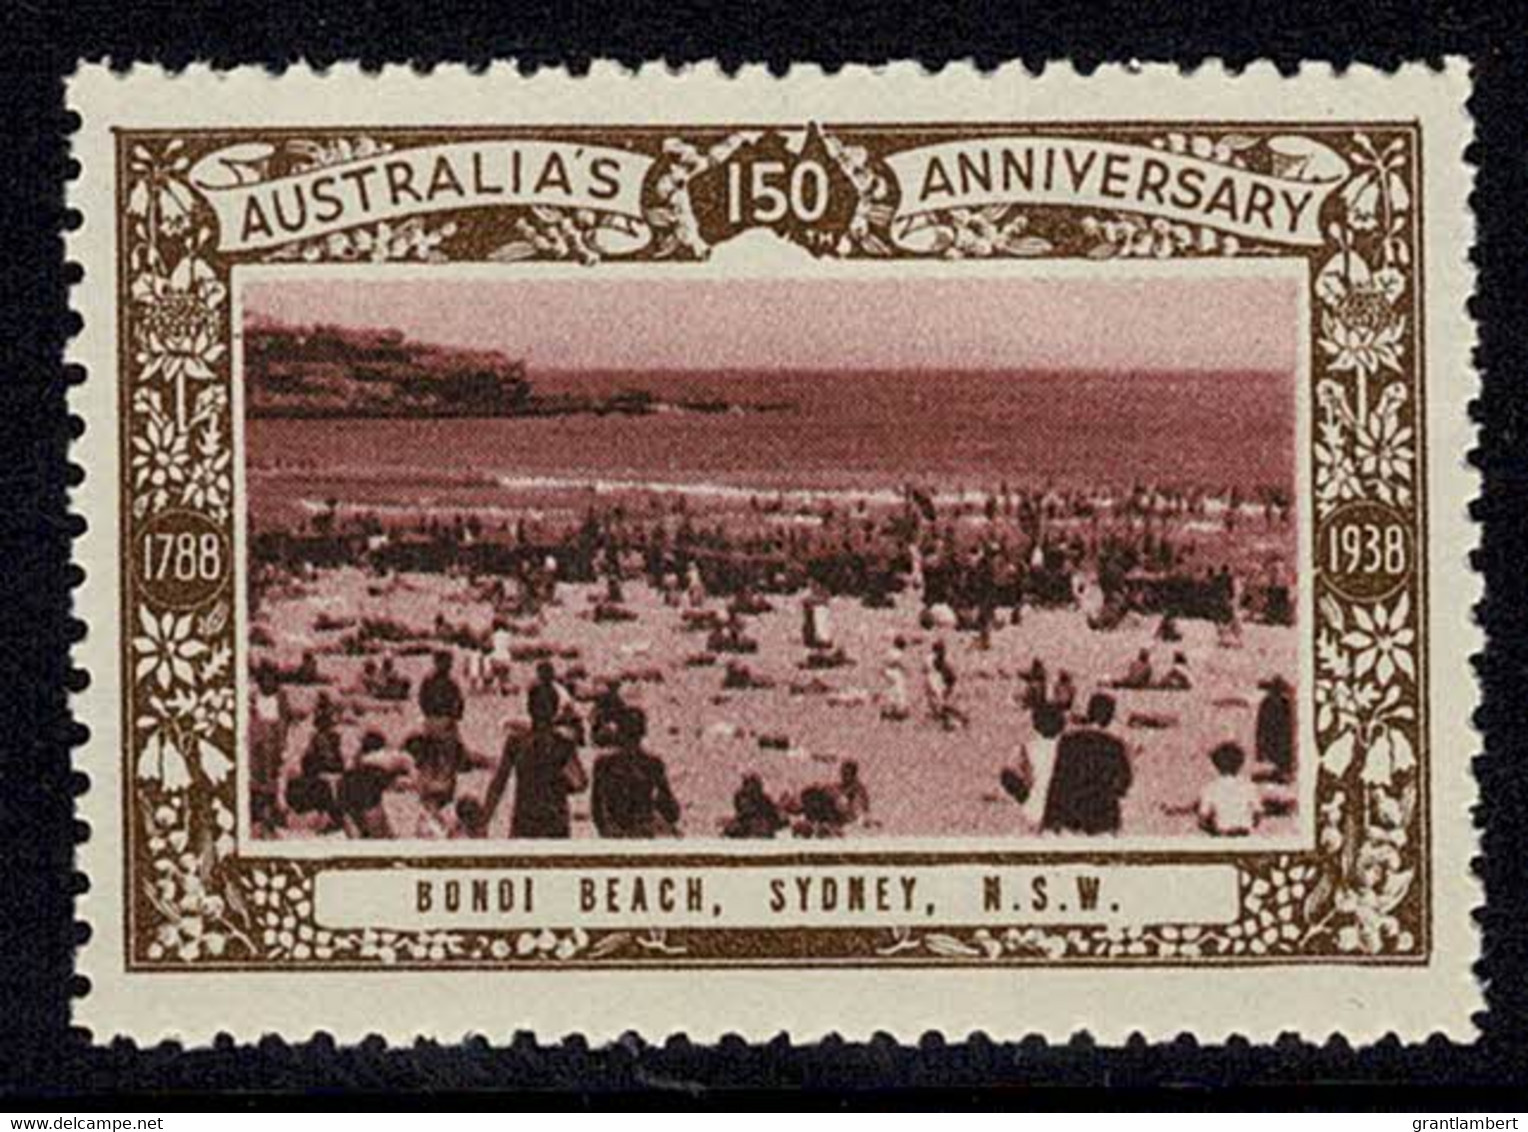 Australia 1938 Bondi Beach, Sydney - NSW 150th Anniversary Cinderella MNH - Cinderelas